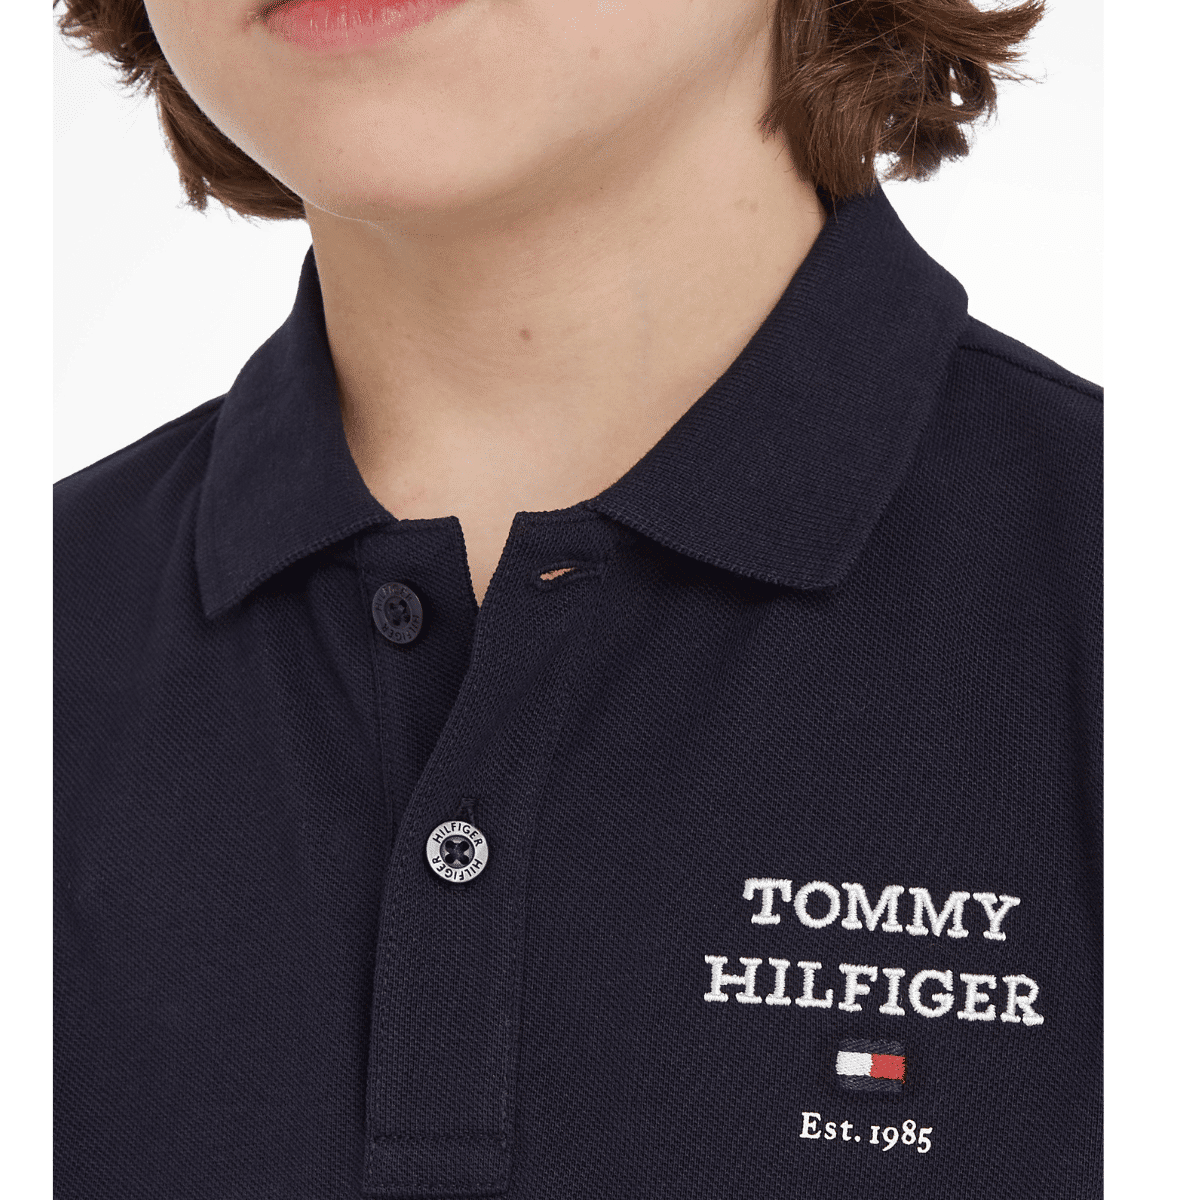 Tommy hilfiger boys black polo shirt logo close up